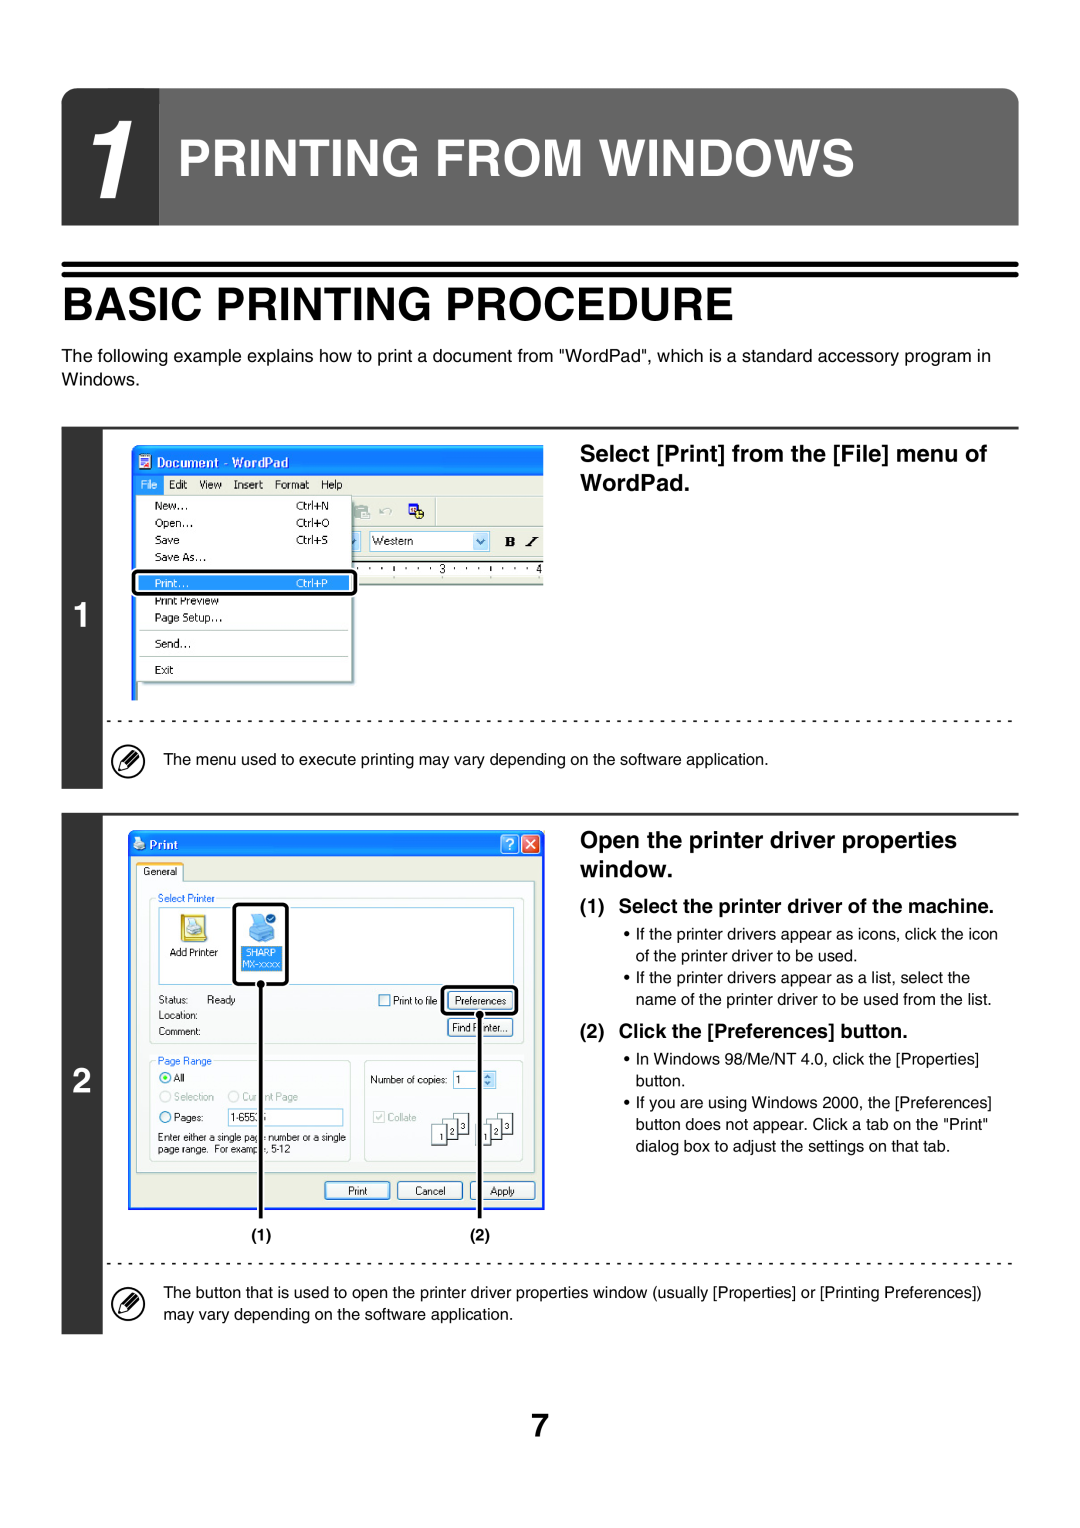 Sharp MX-7000N, MX-6200N manual Printing From Windows, Basic Printing Procedure, Select Print from the File menu of WordPad 